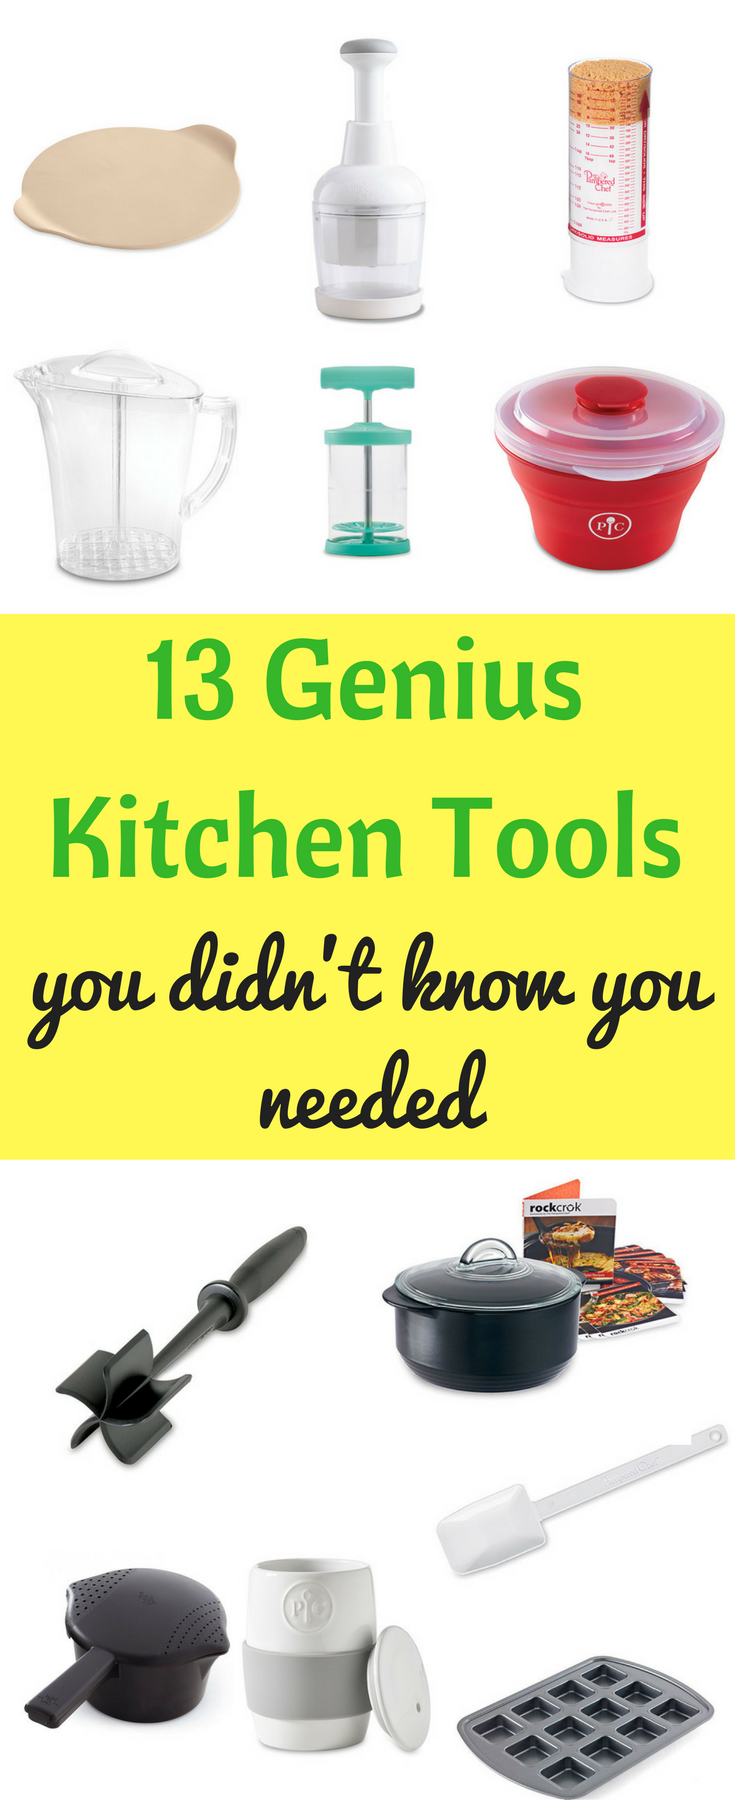 https://www.clarkscondensed.com/wp-content/uploads/2017/04/13-Genius-Kitchen-Tools.png